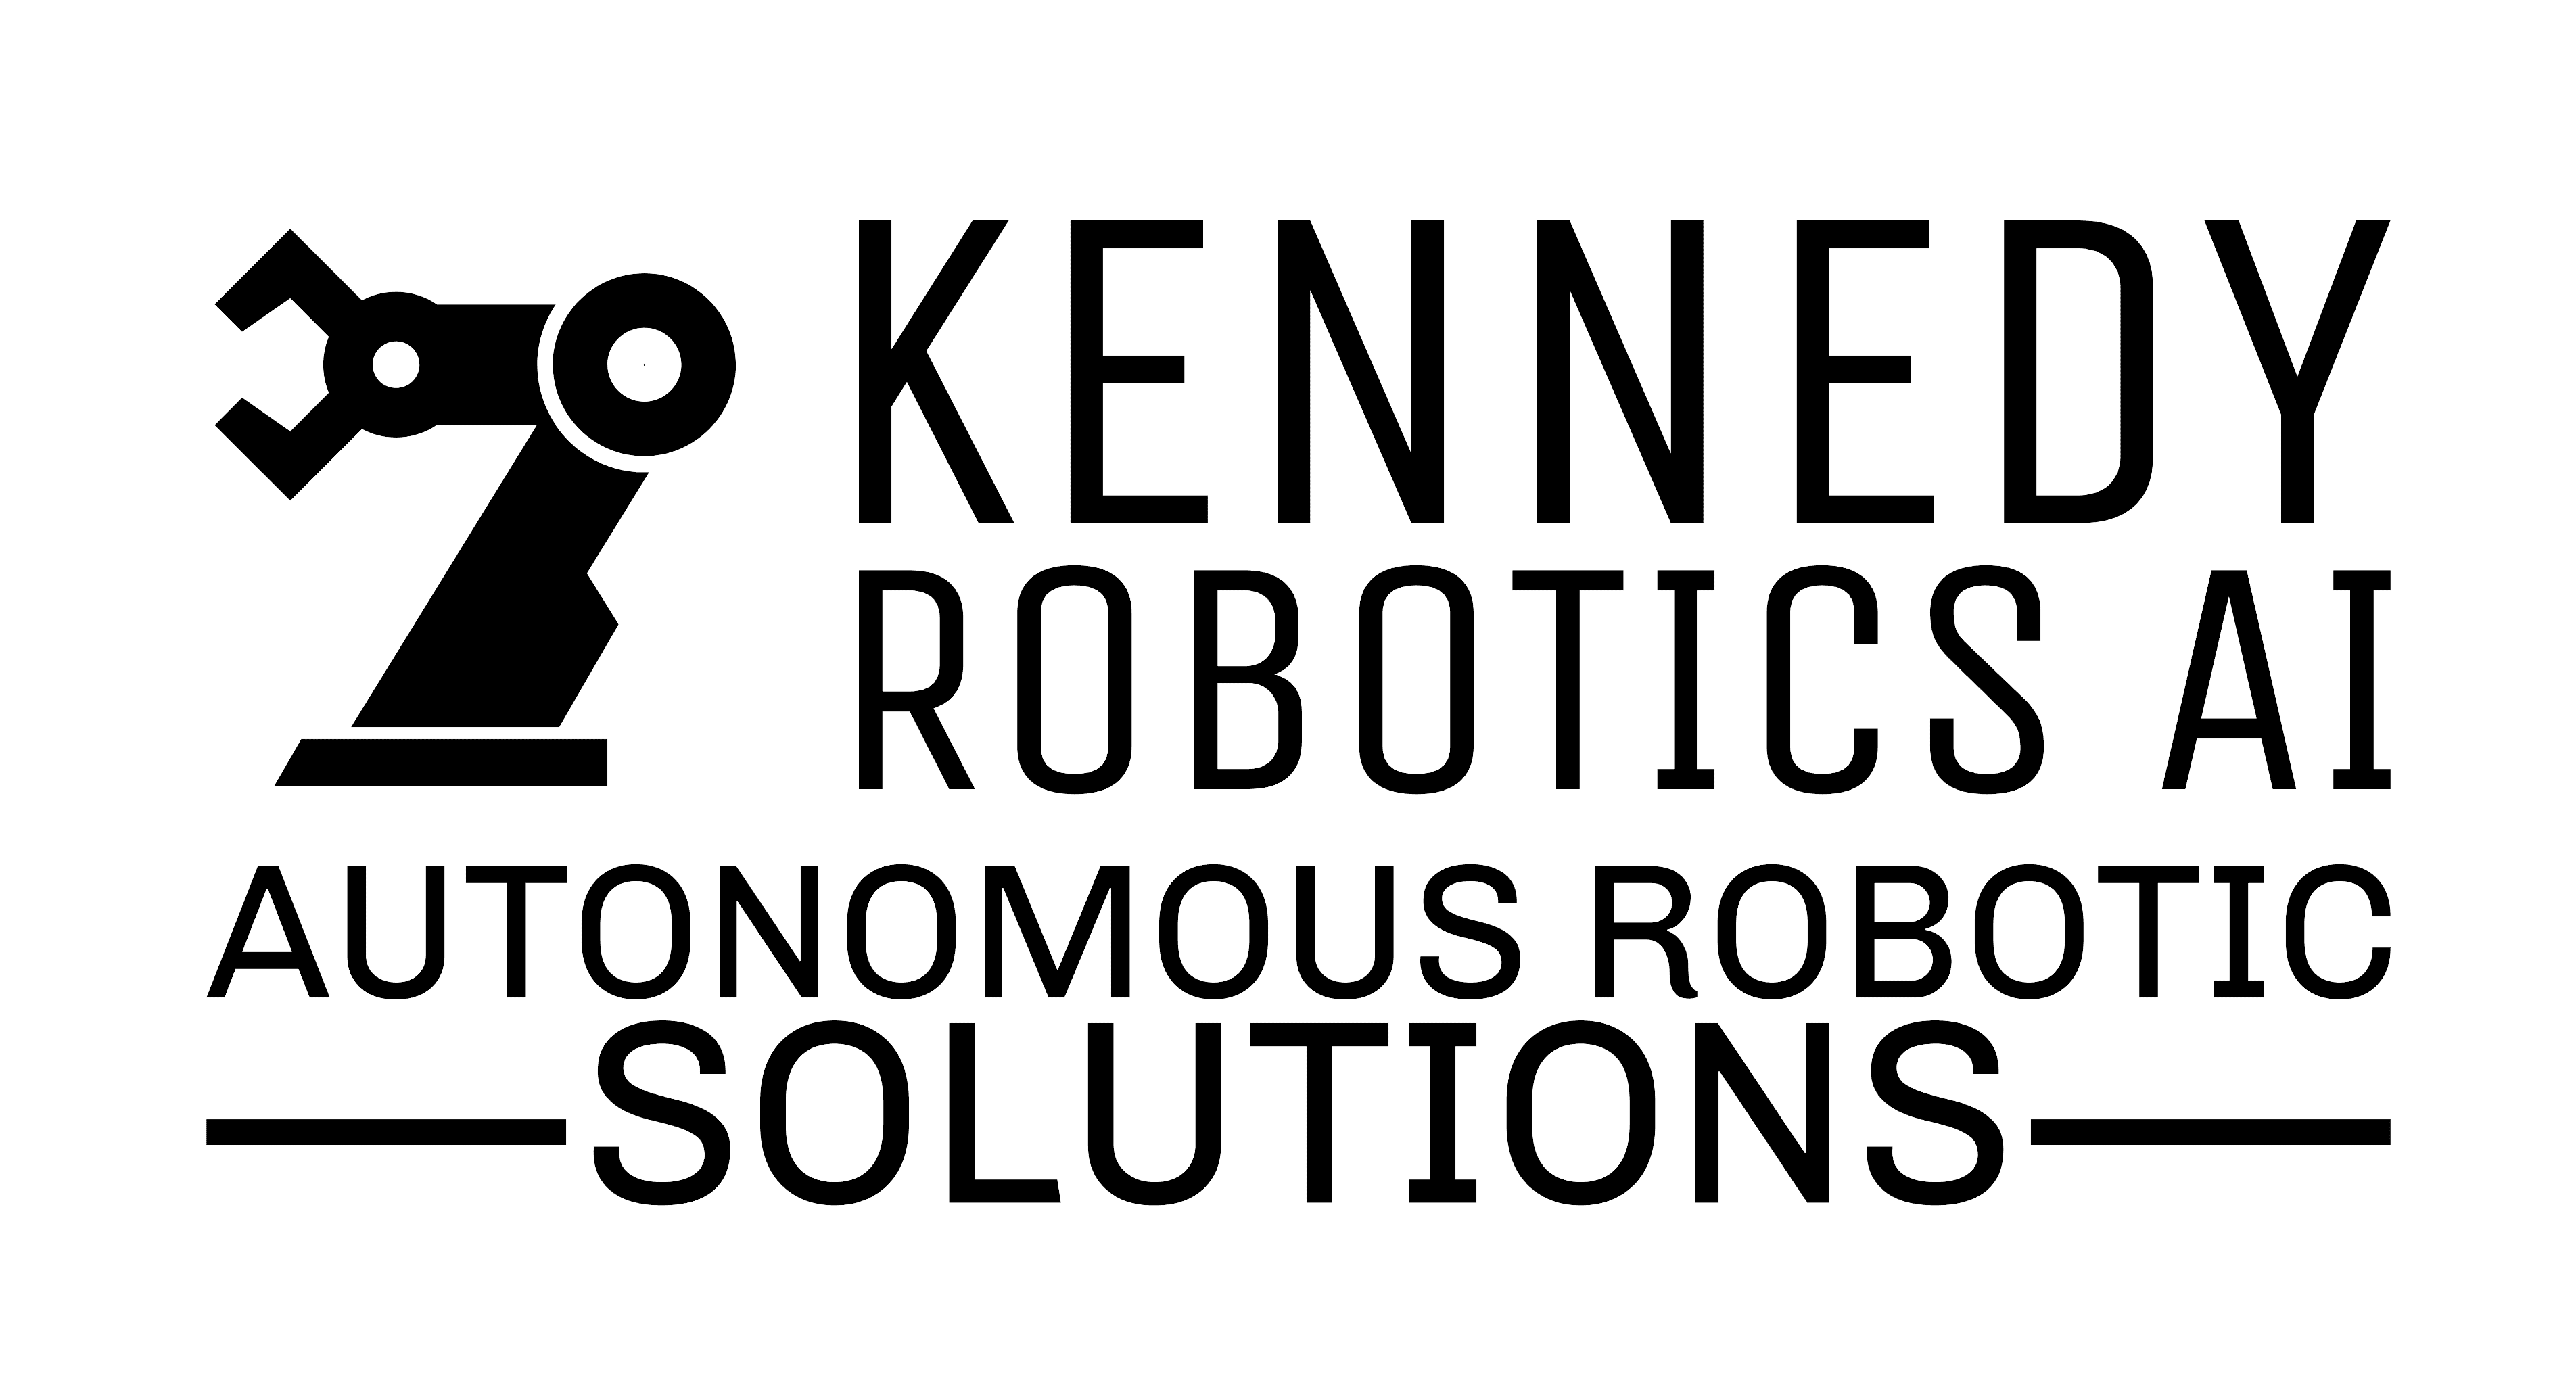 KENNEDY ROBOTICS AI, LLC 

AUTONOMOUS ROBOTIC SOLUTIONS

SPARTANBURG SC, 29307